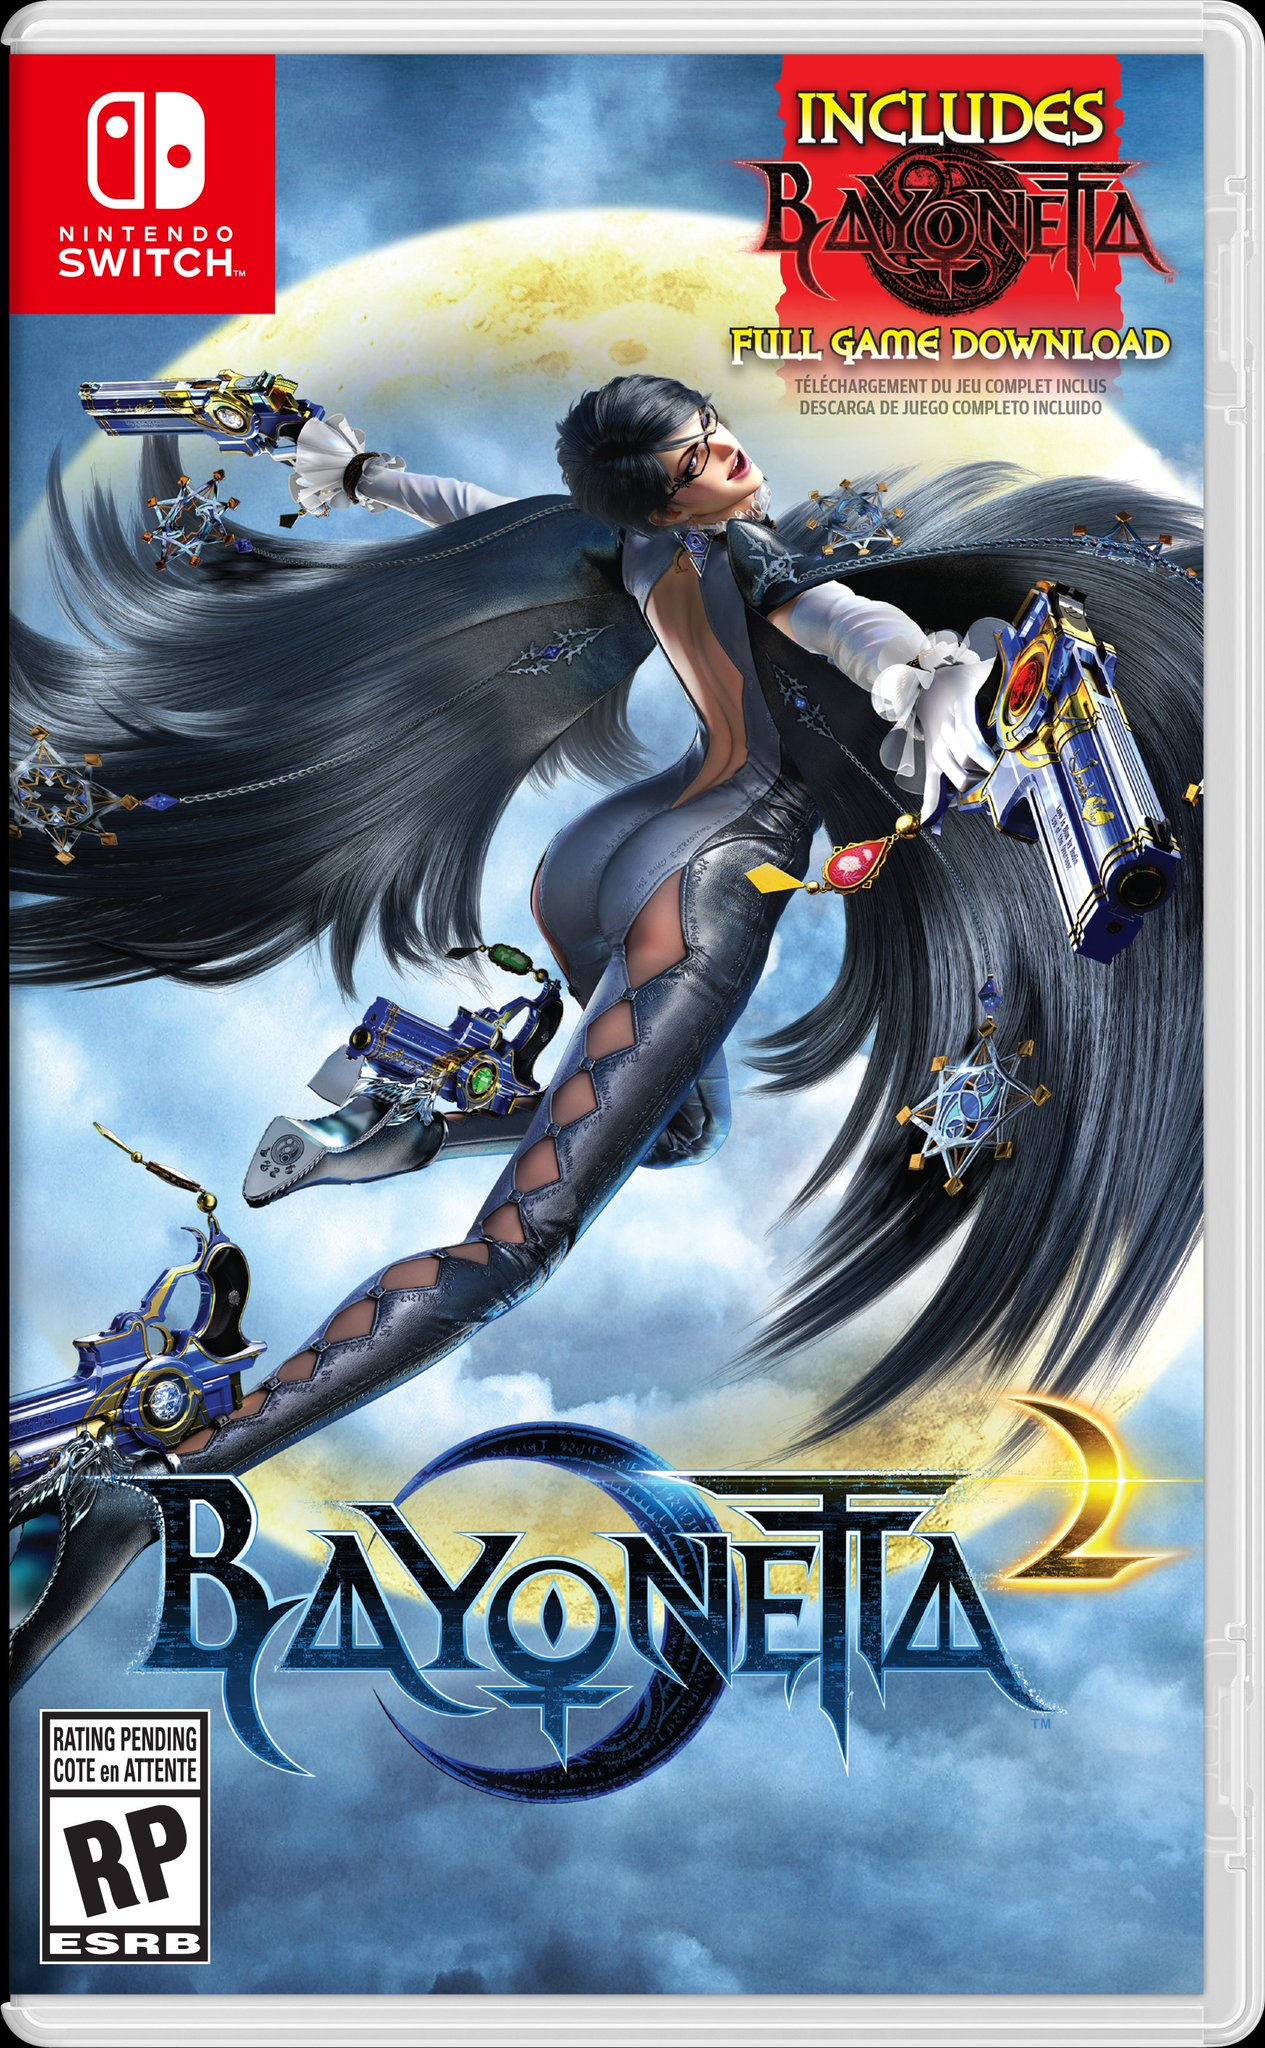 Bayonetta 3 Limited Edition, Bayonetta 1 Physical Release Detailed -  Siliconera